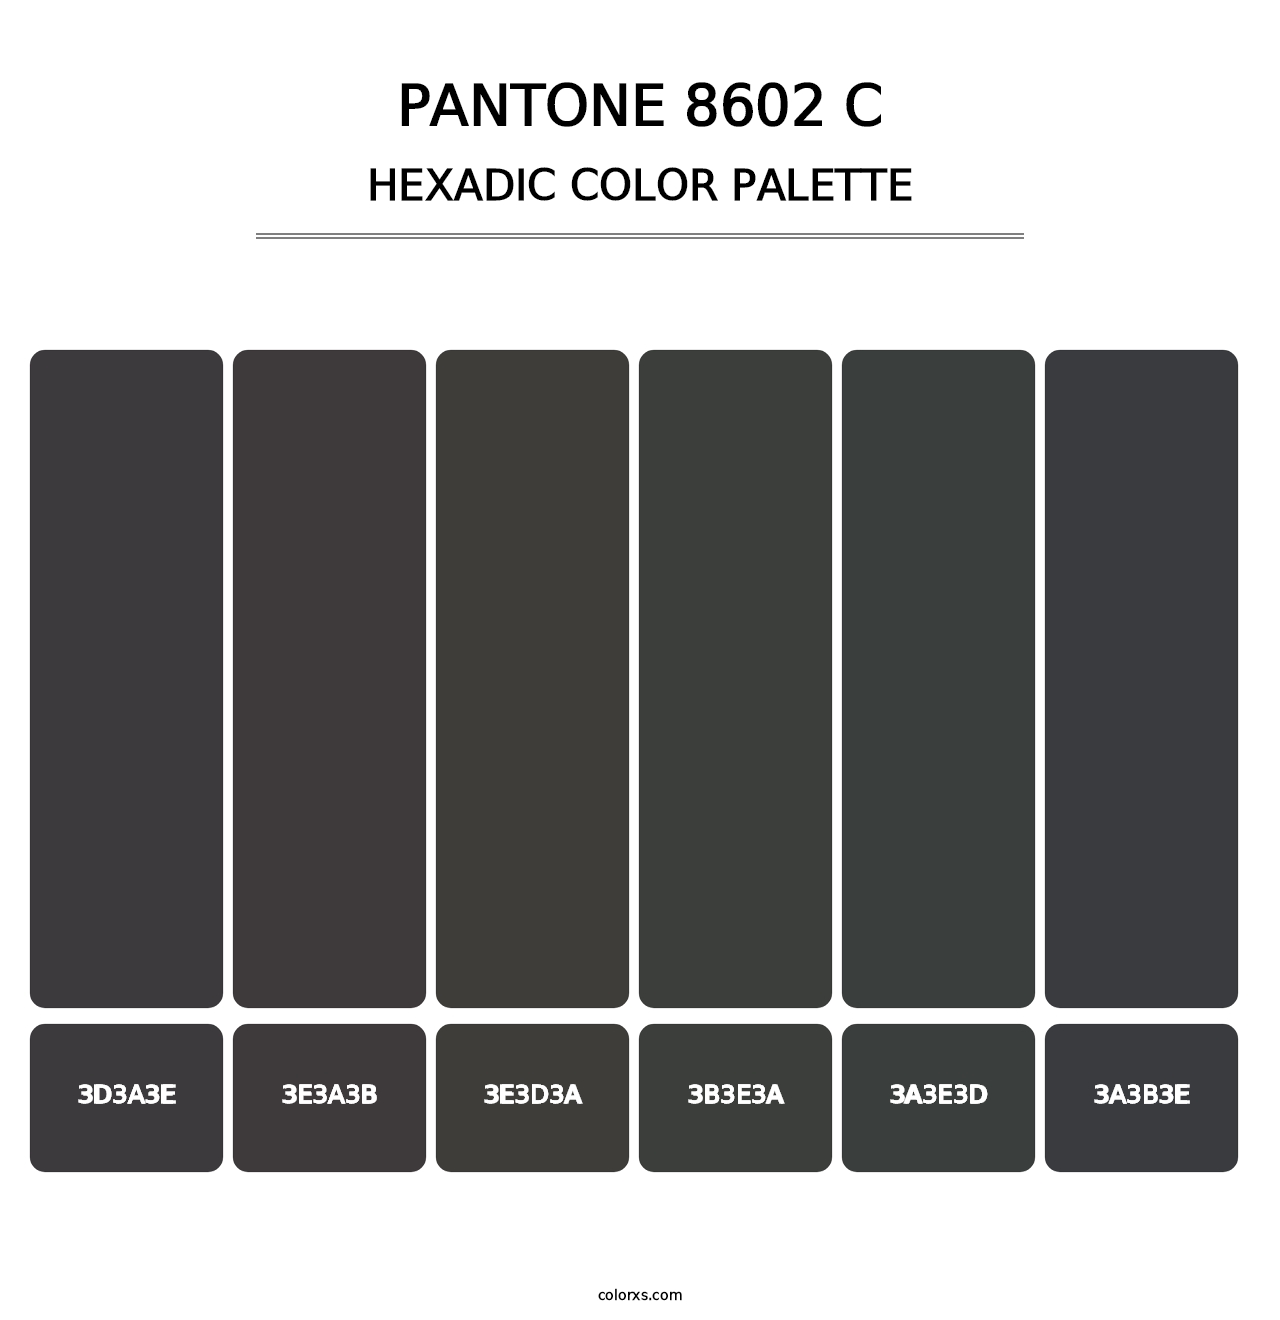 PANTONE 8602 C - Hexadic Color Palette